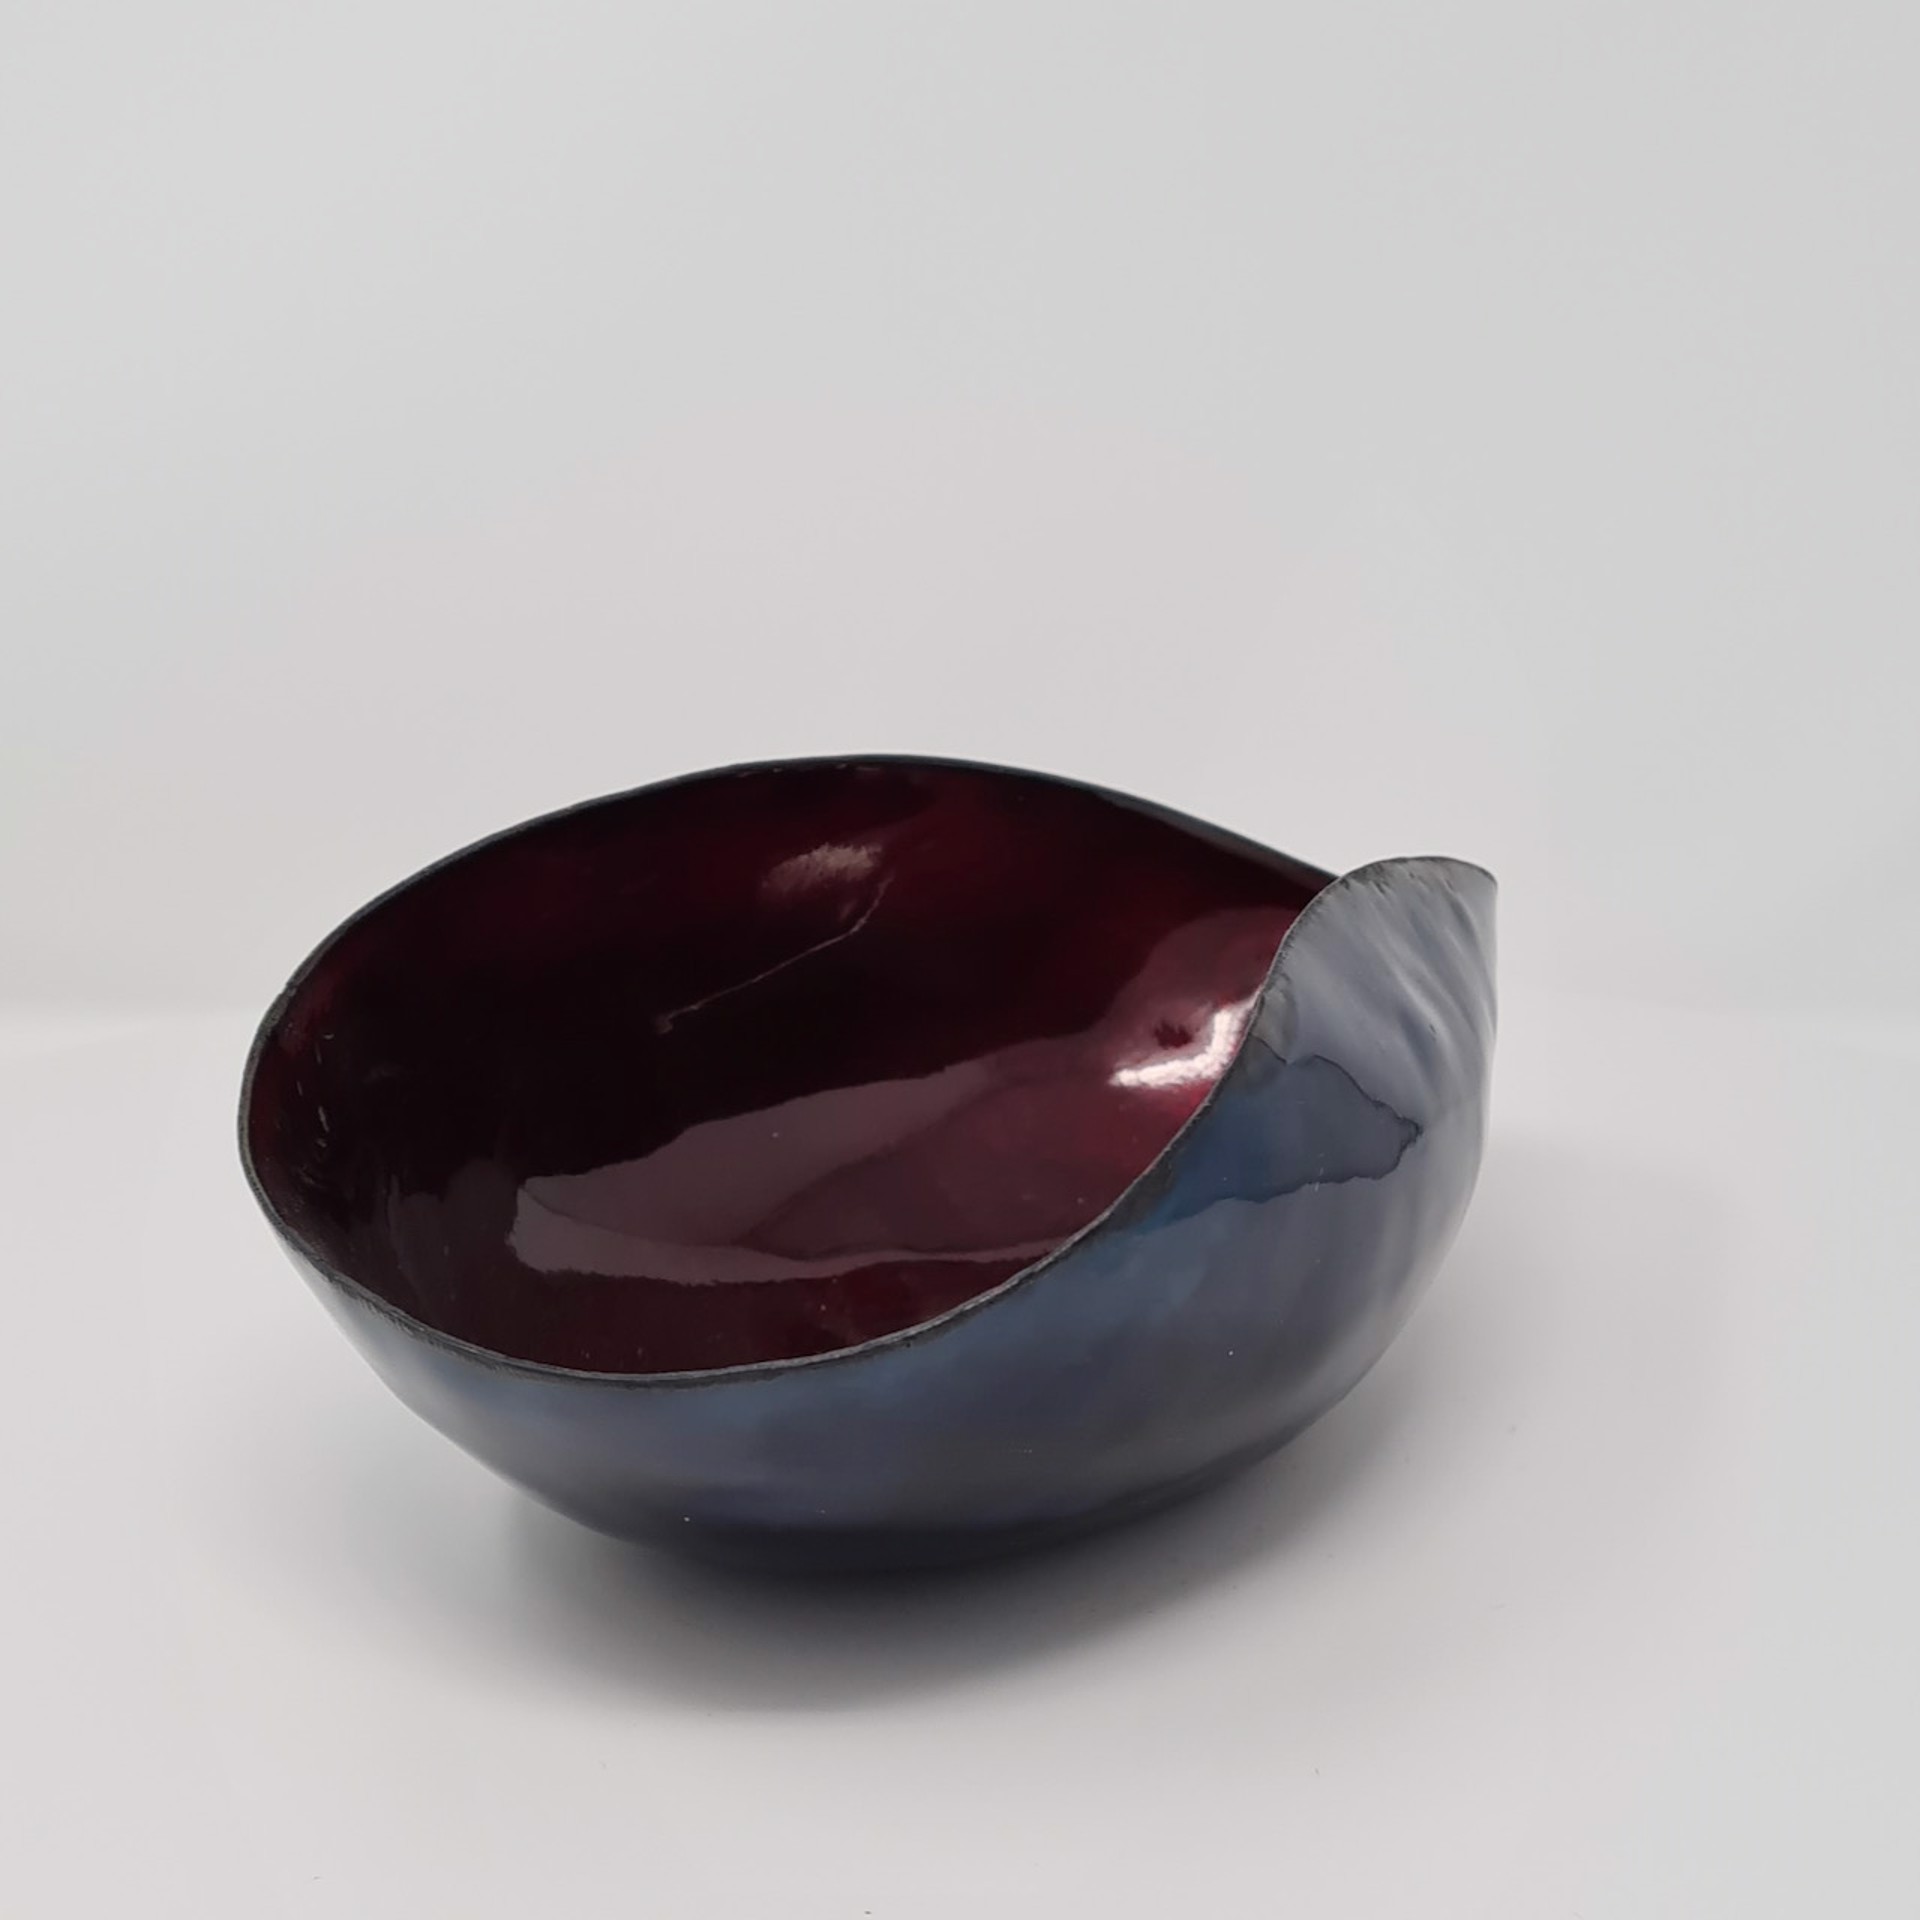 Enamel Copper Altered Bowl by Lundsten Glazzard